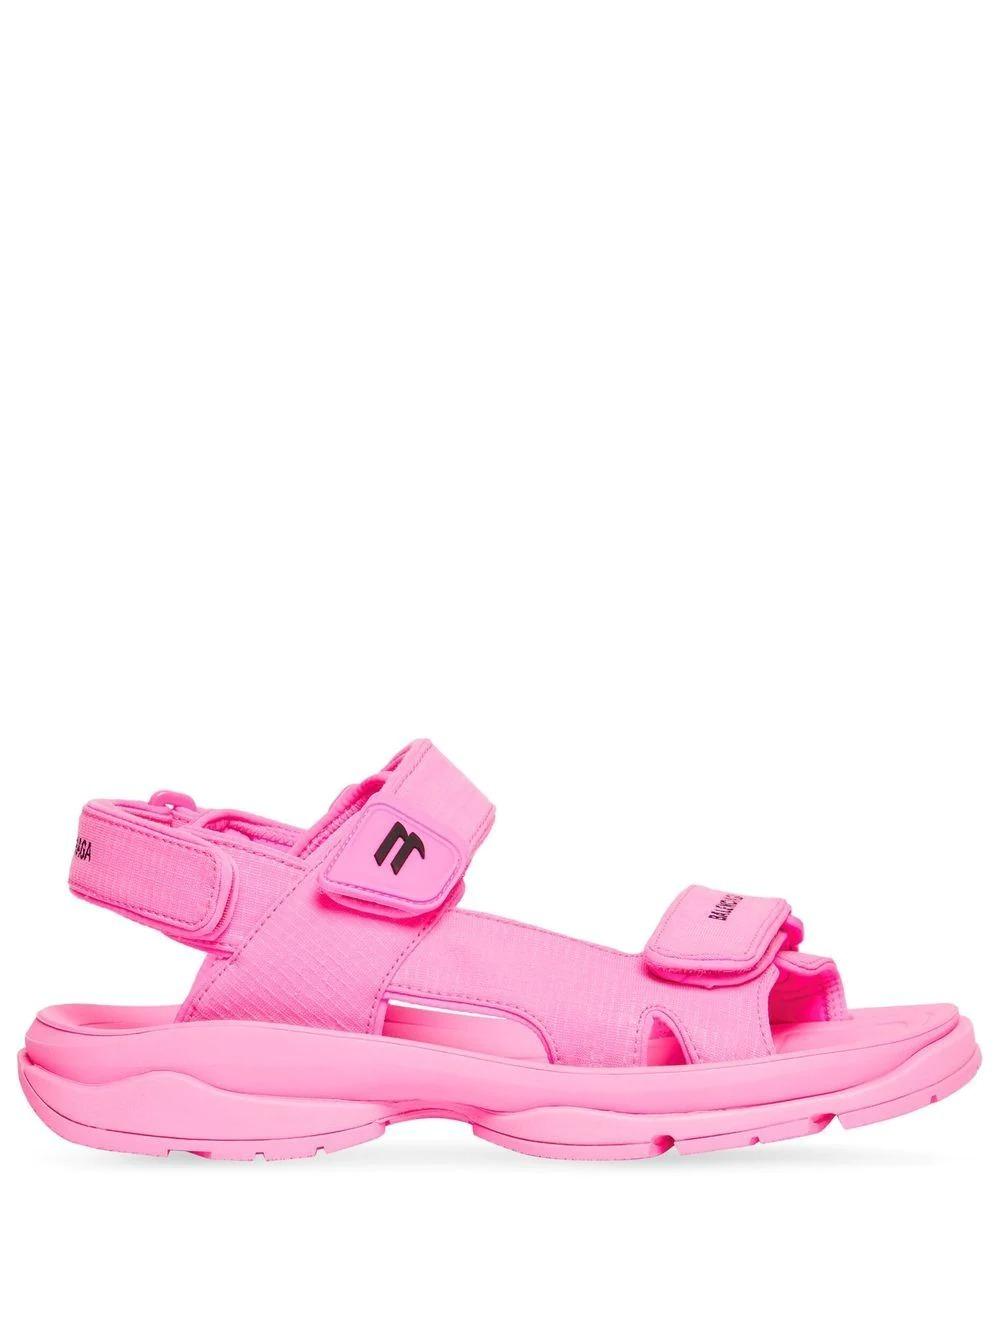 Balenciaga Tourist Monocolor Sandals in Pink | Lyst